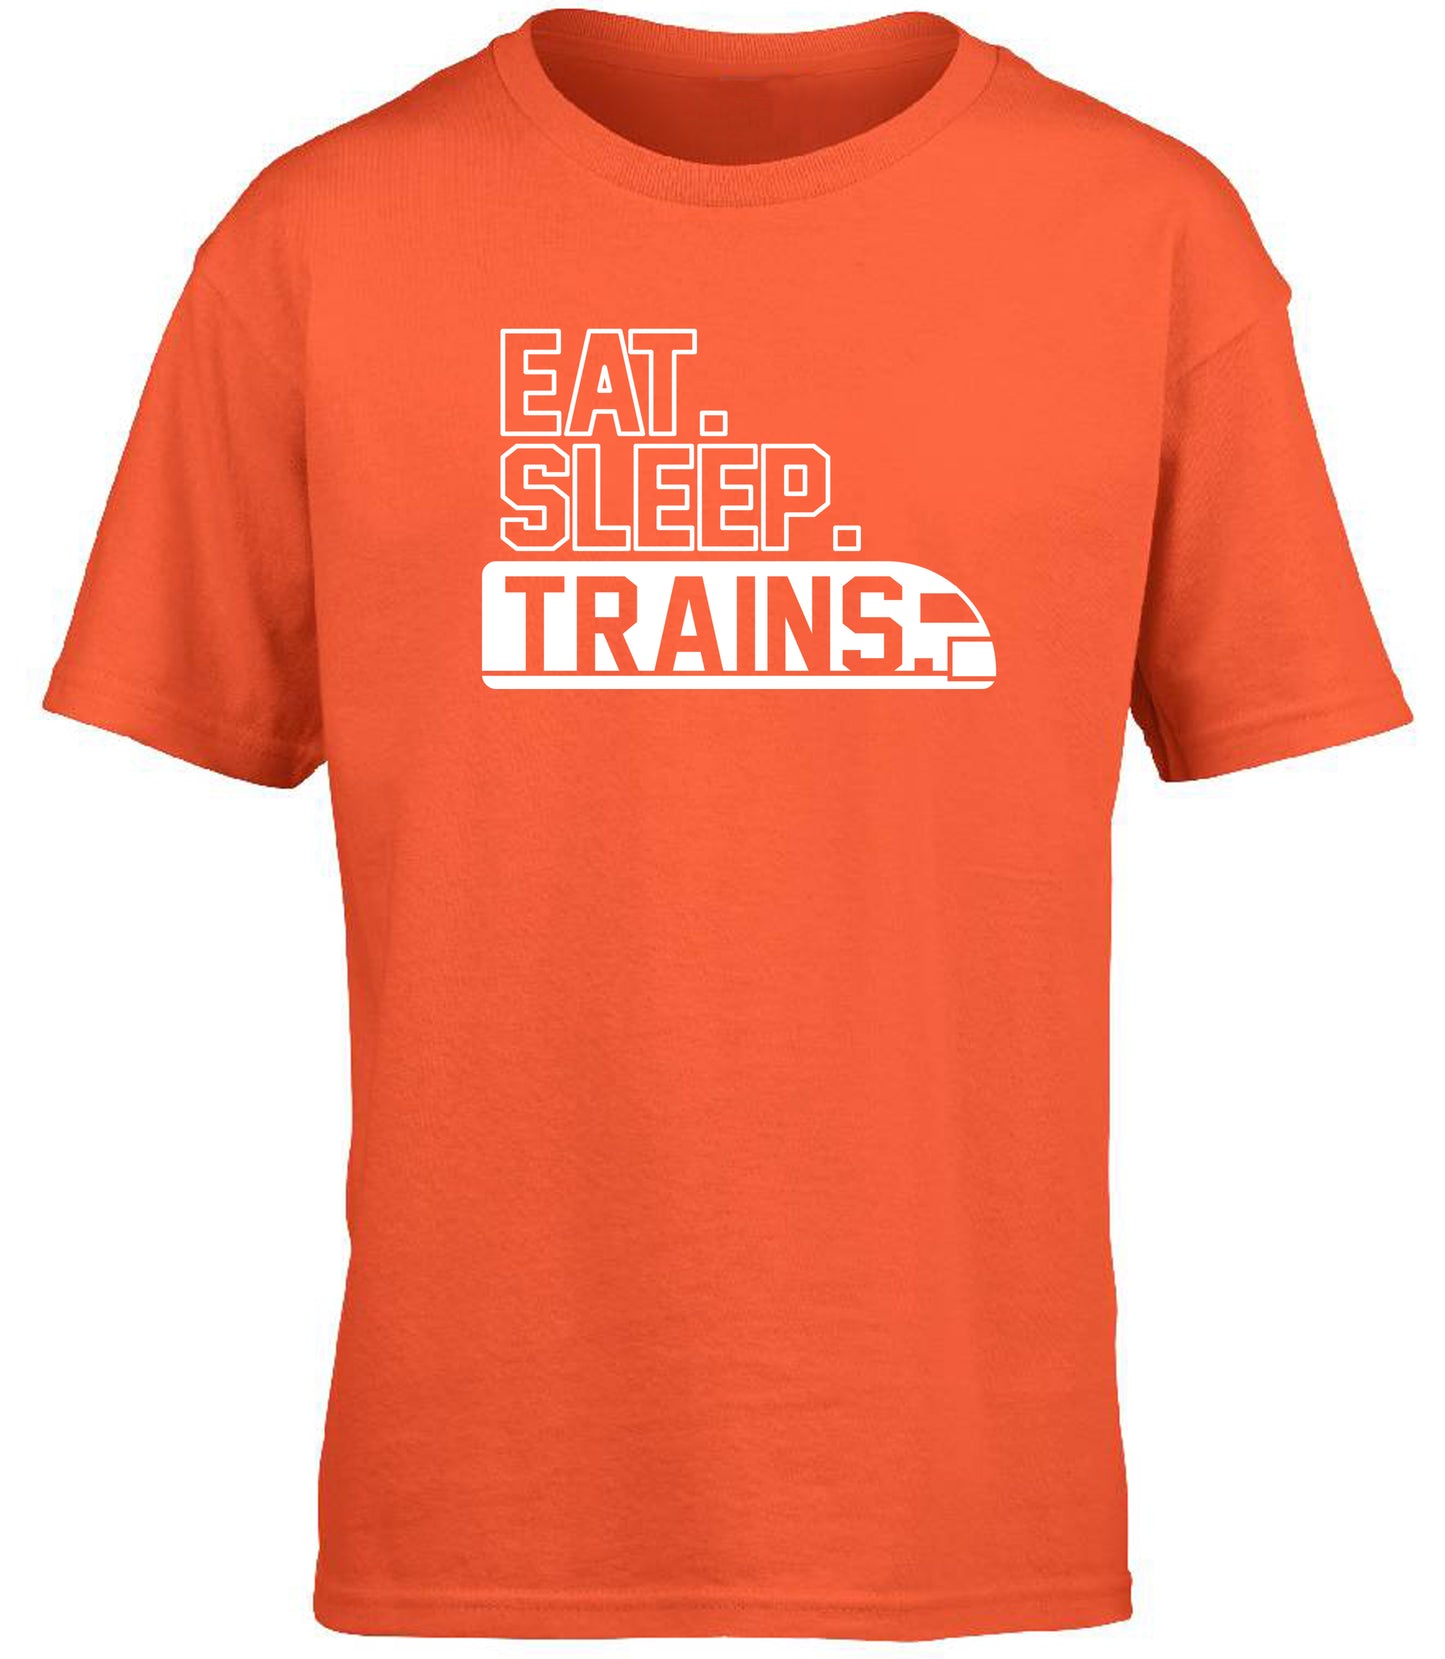 Eat Sleep Trains children's T-shirt